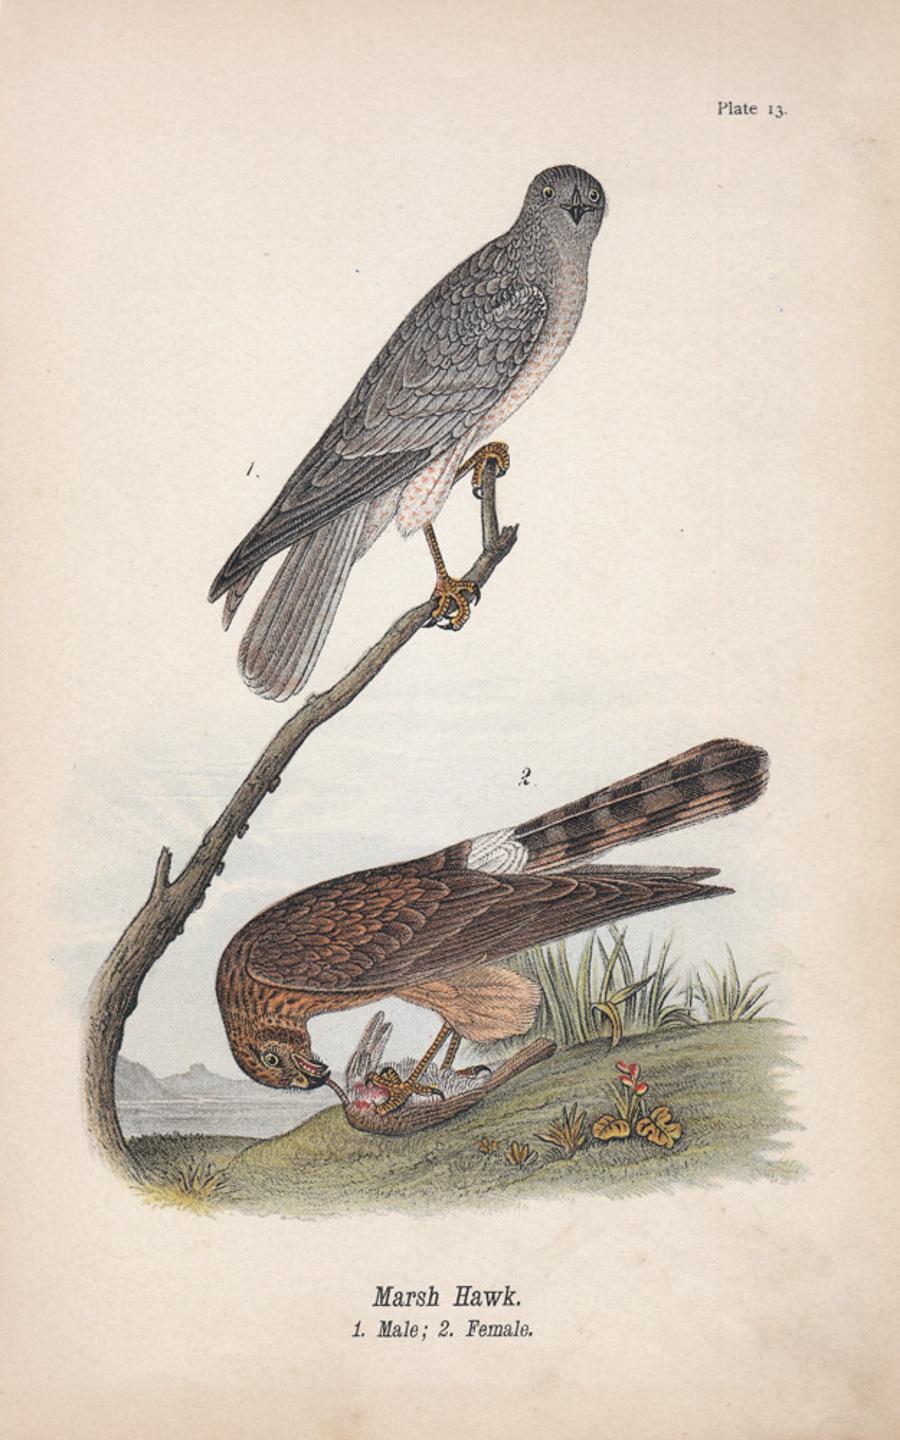 After John James Audubon Animal Print - Marsh Hawk; Plate 13